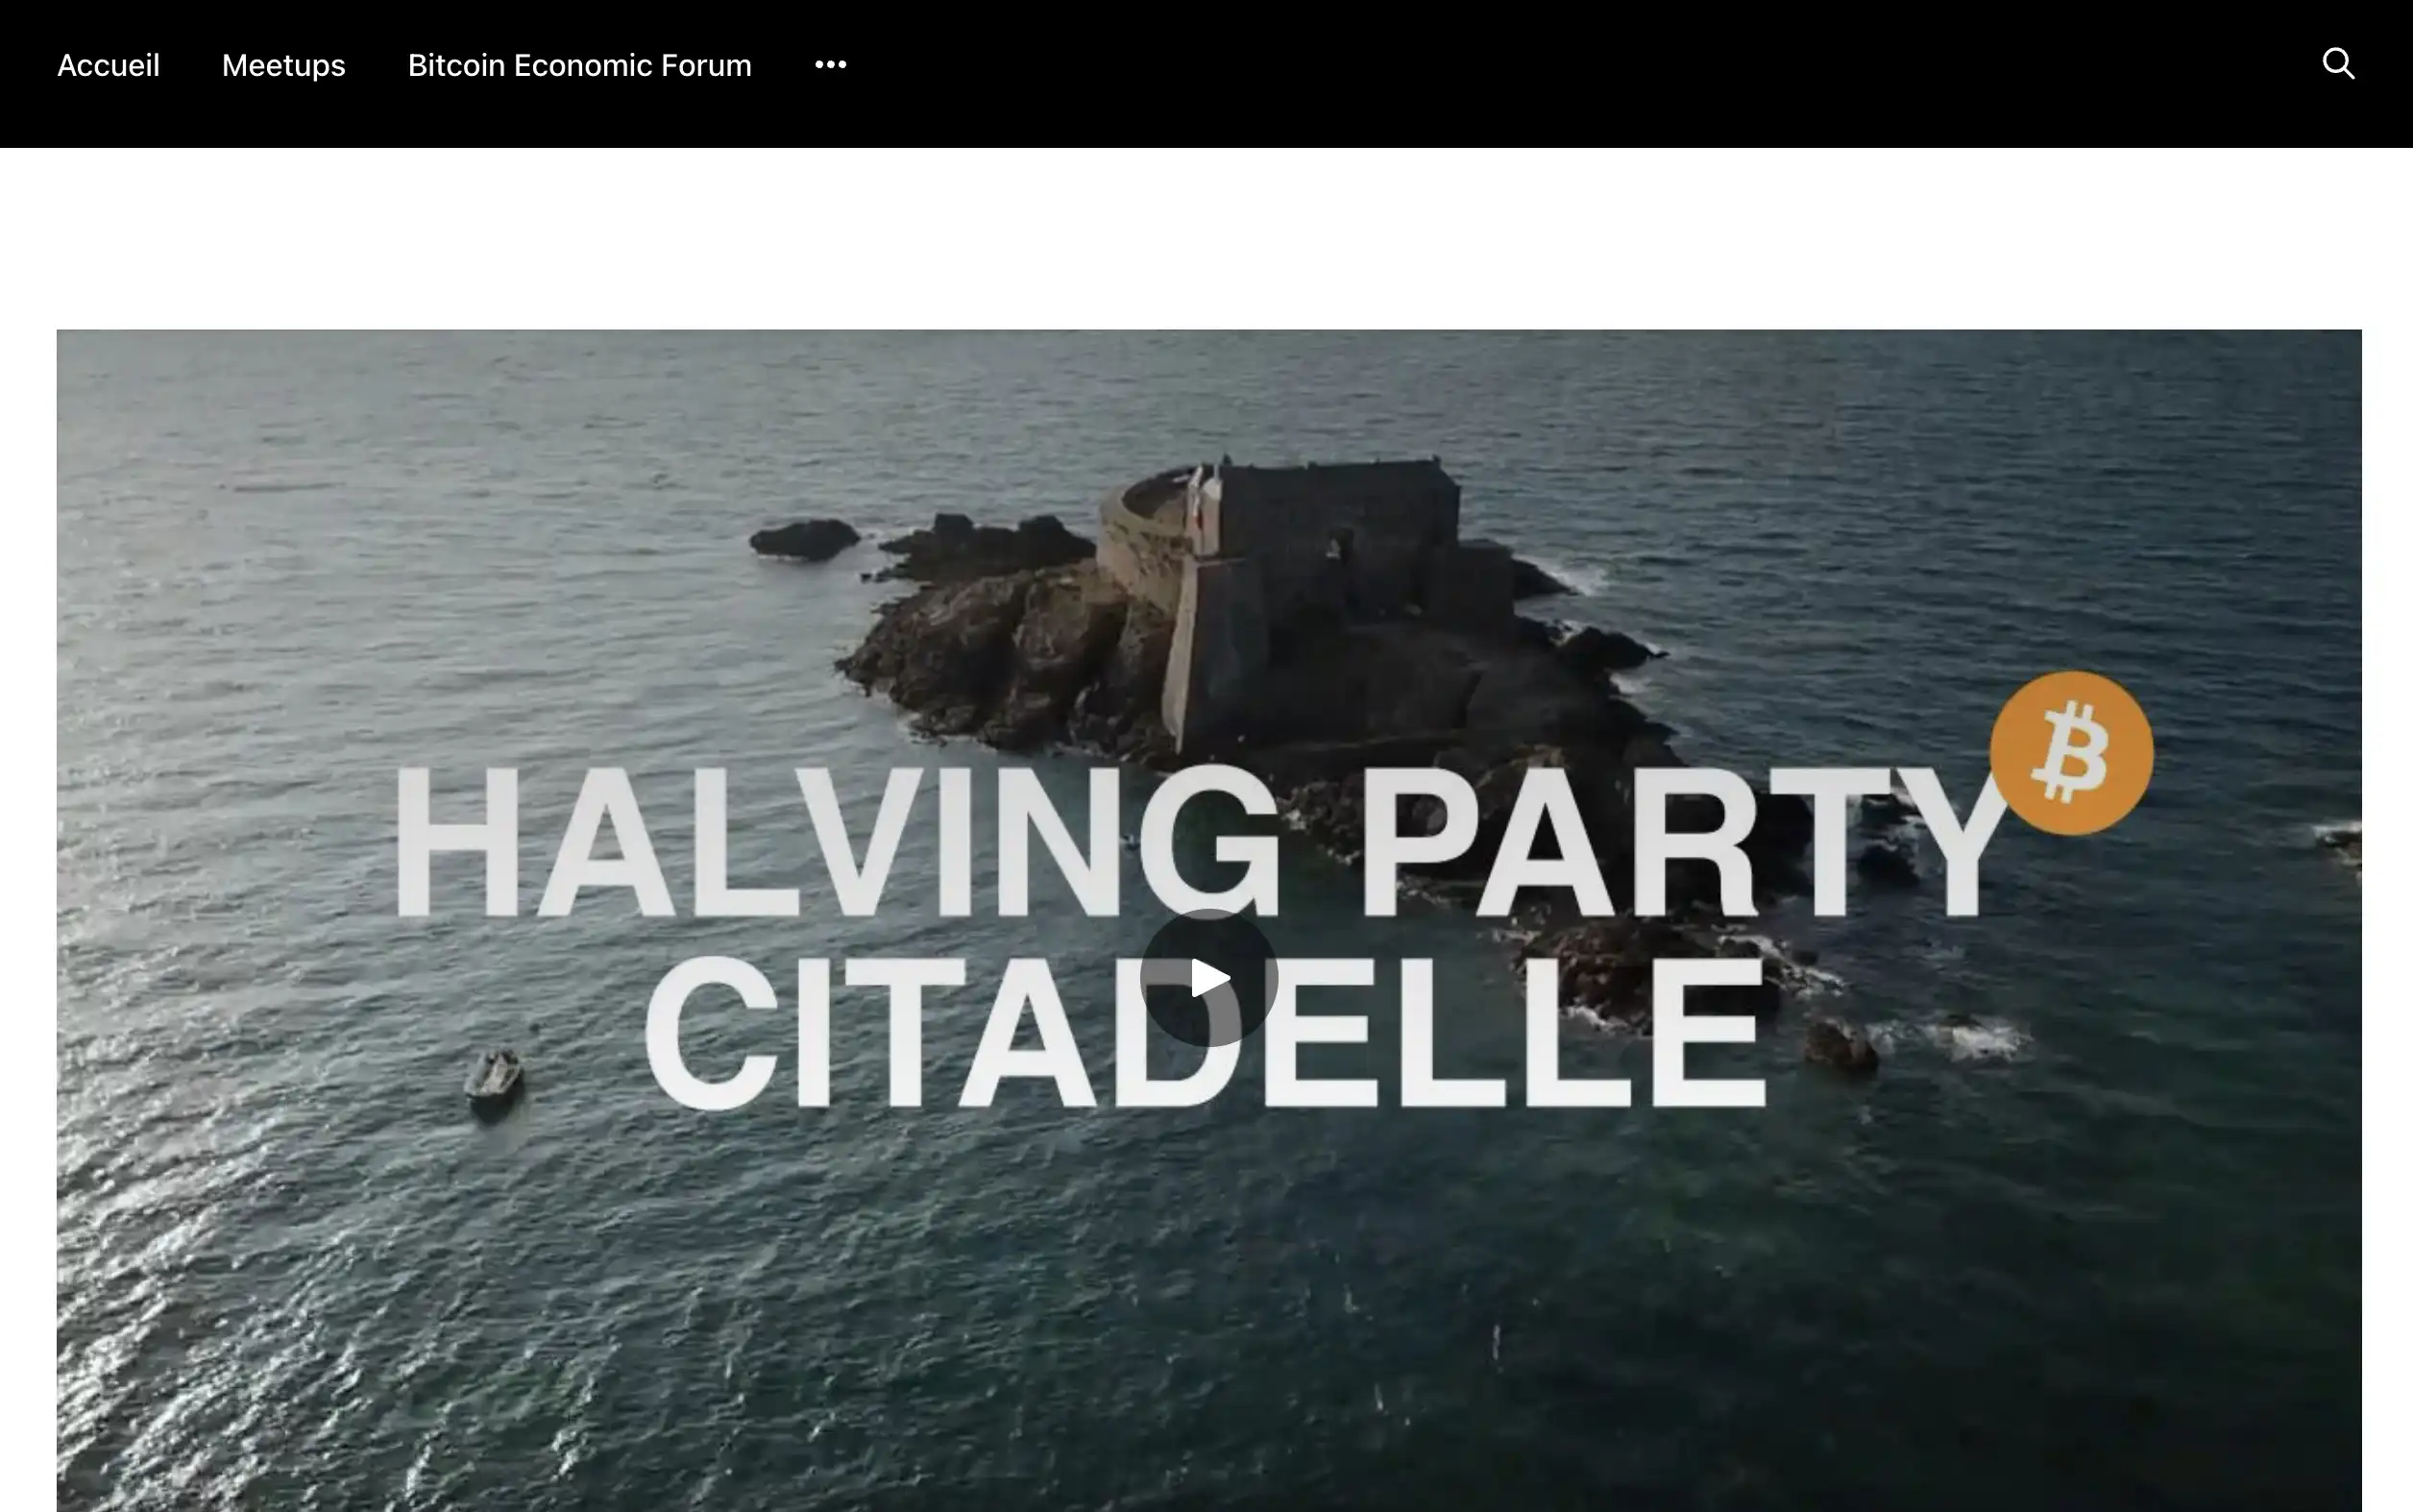 Halving Party Citadelle